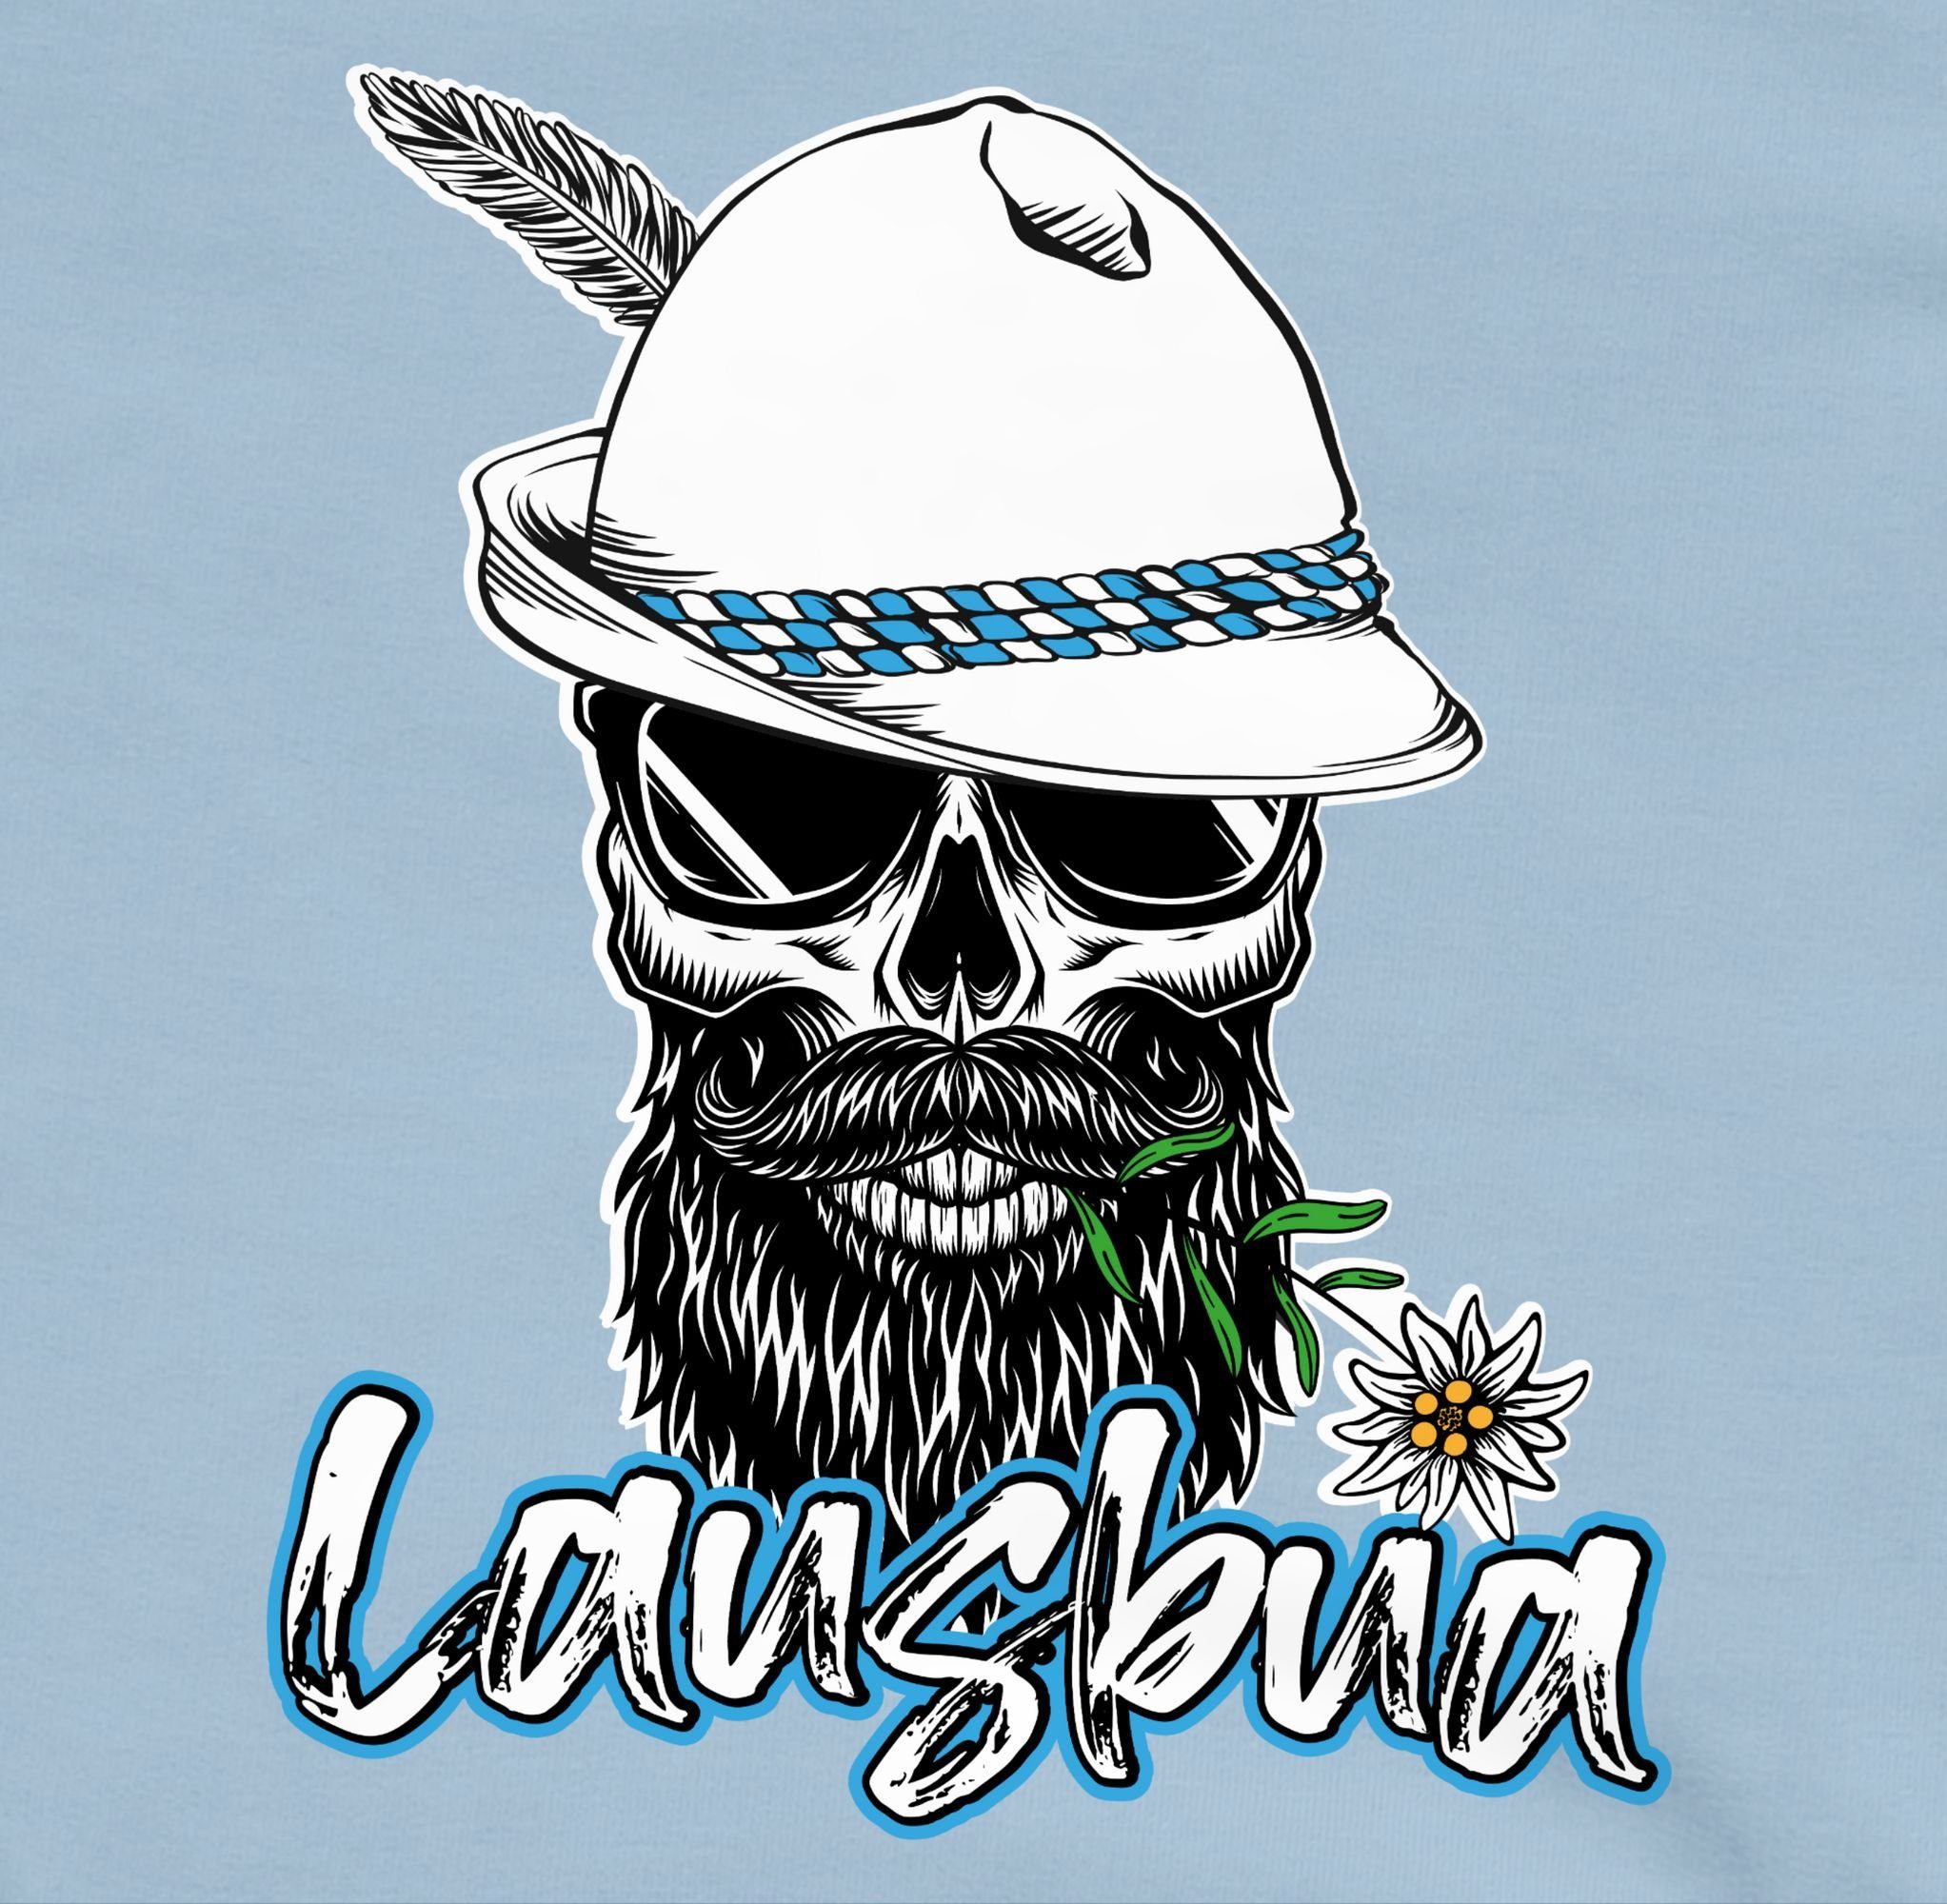 Hellblau Lausbub 2 Oktoberfest für Totenkopf Skull Kinder Bayrisch Mode Sweatshirt Shirtracer Lausbua Outfit Schlingel